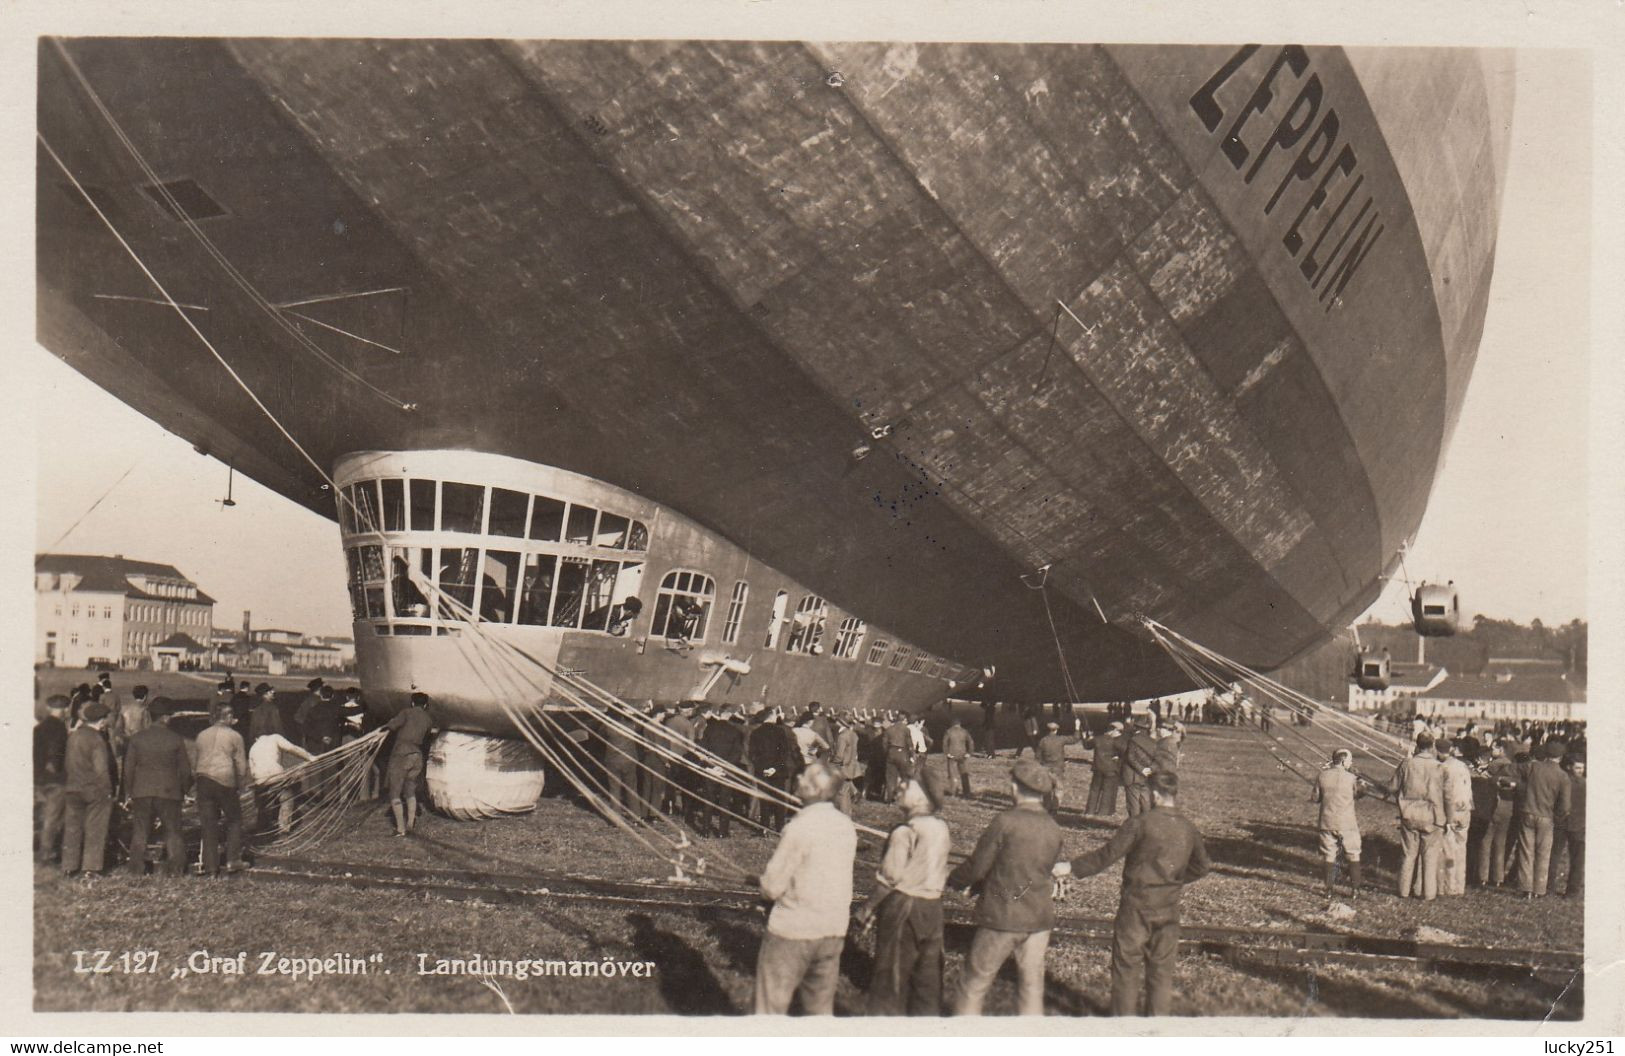 Zeppelin - 1930 - Allemagne - Carte Postal Du 11/11/1930 - Vers Pays-Bas - Zeppelines